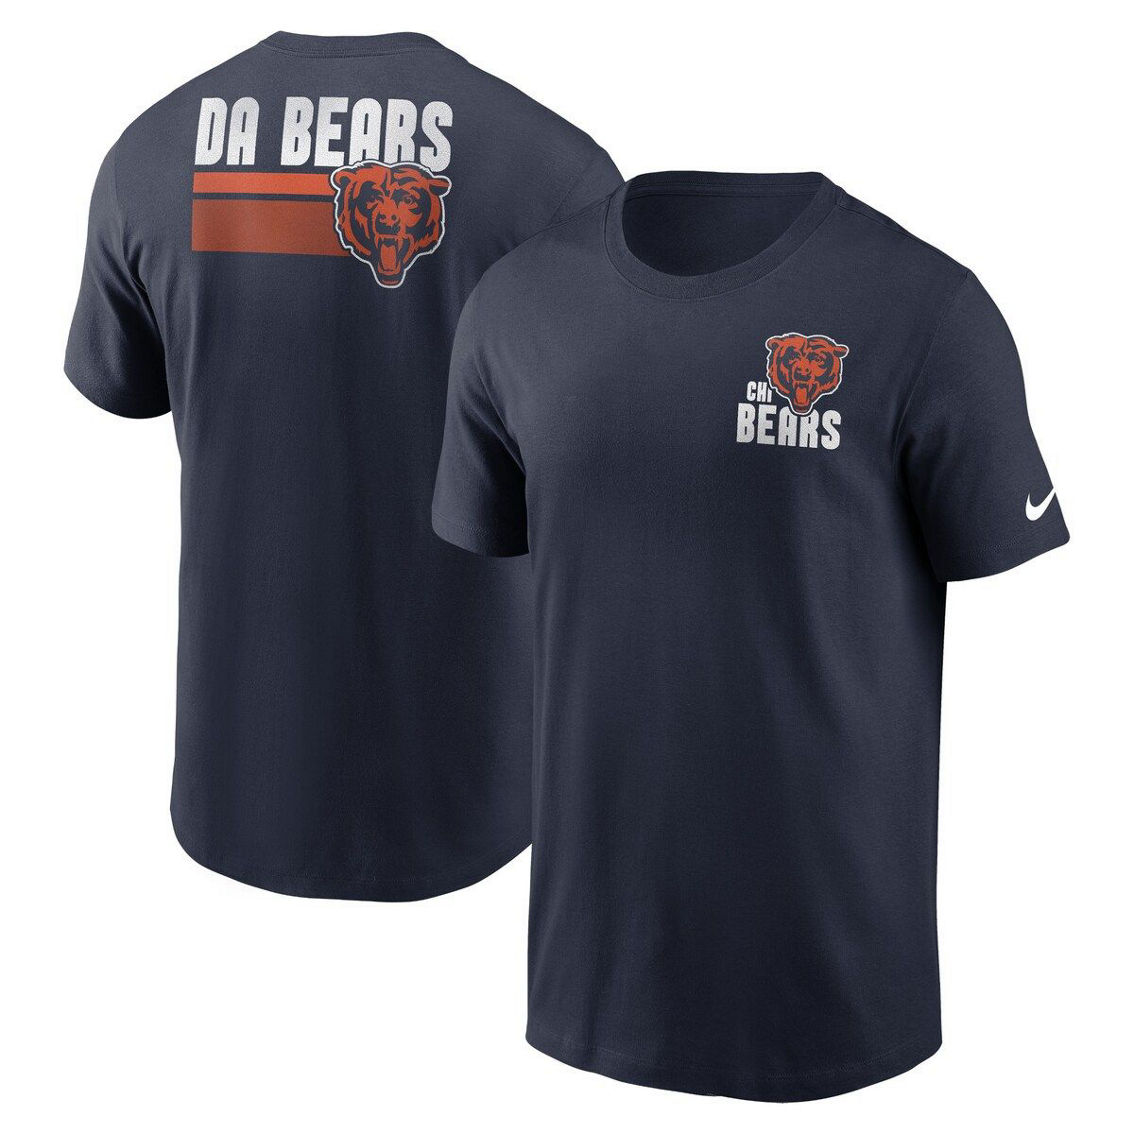 Nike Men's Navy Chicago Bears Blitz Essential T-Shirt - Image 1 of 4